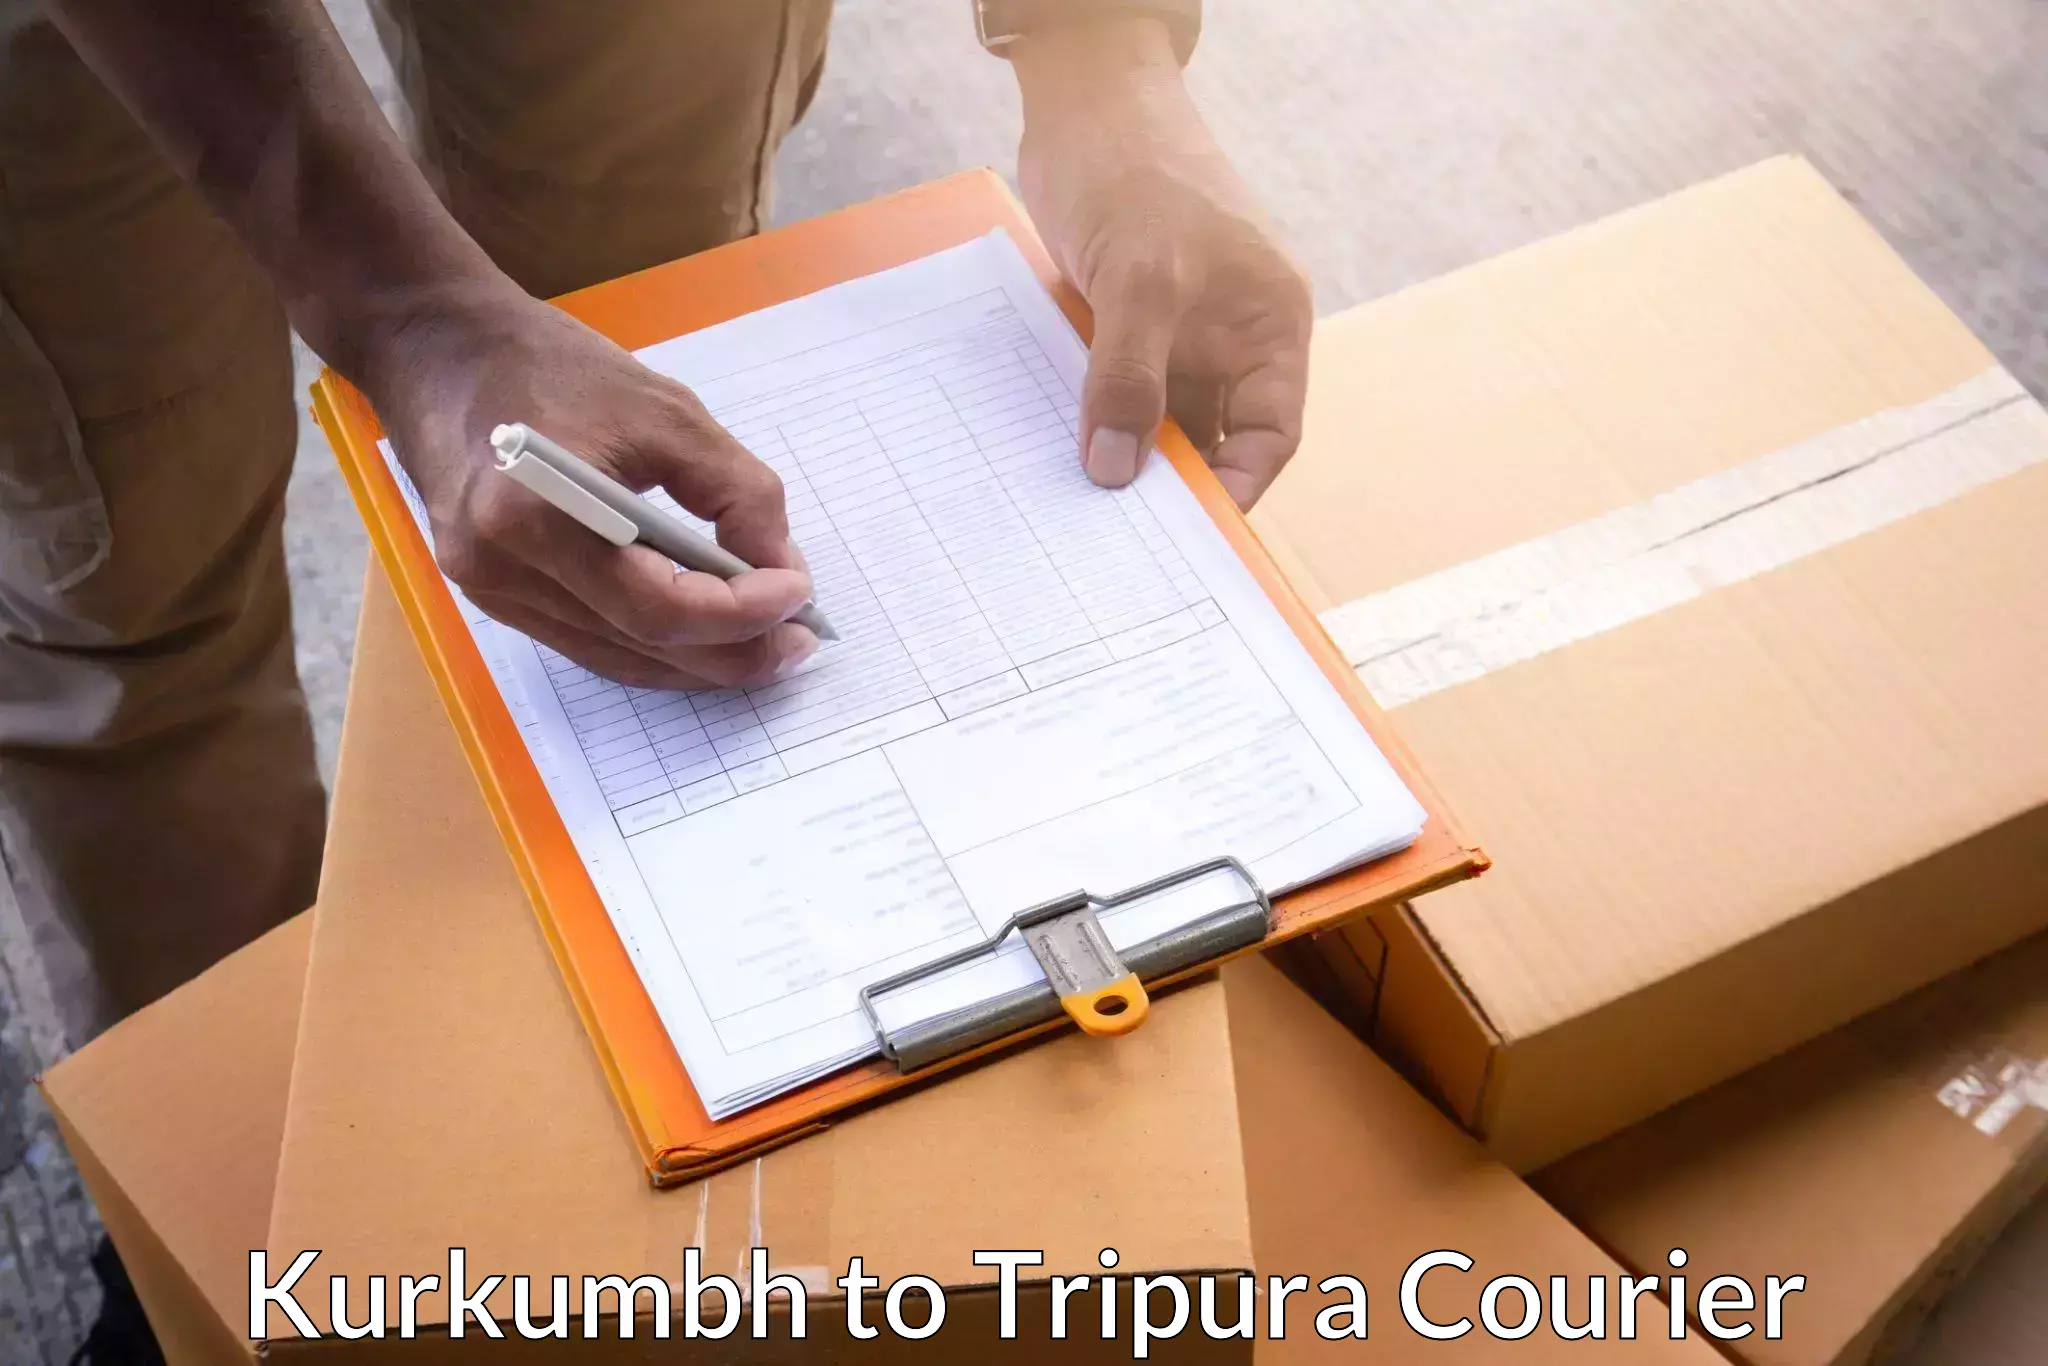 Next-day freight services Kurkumbh to Udaipur Tripura